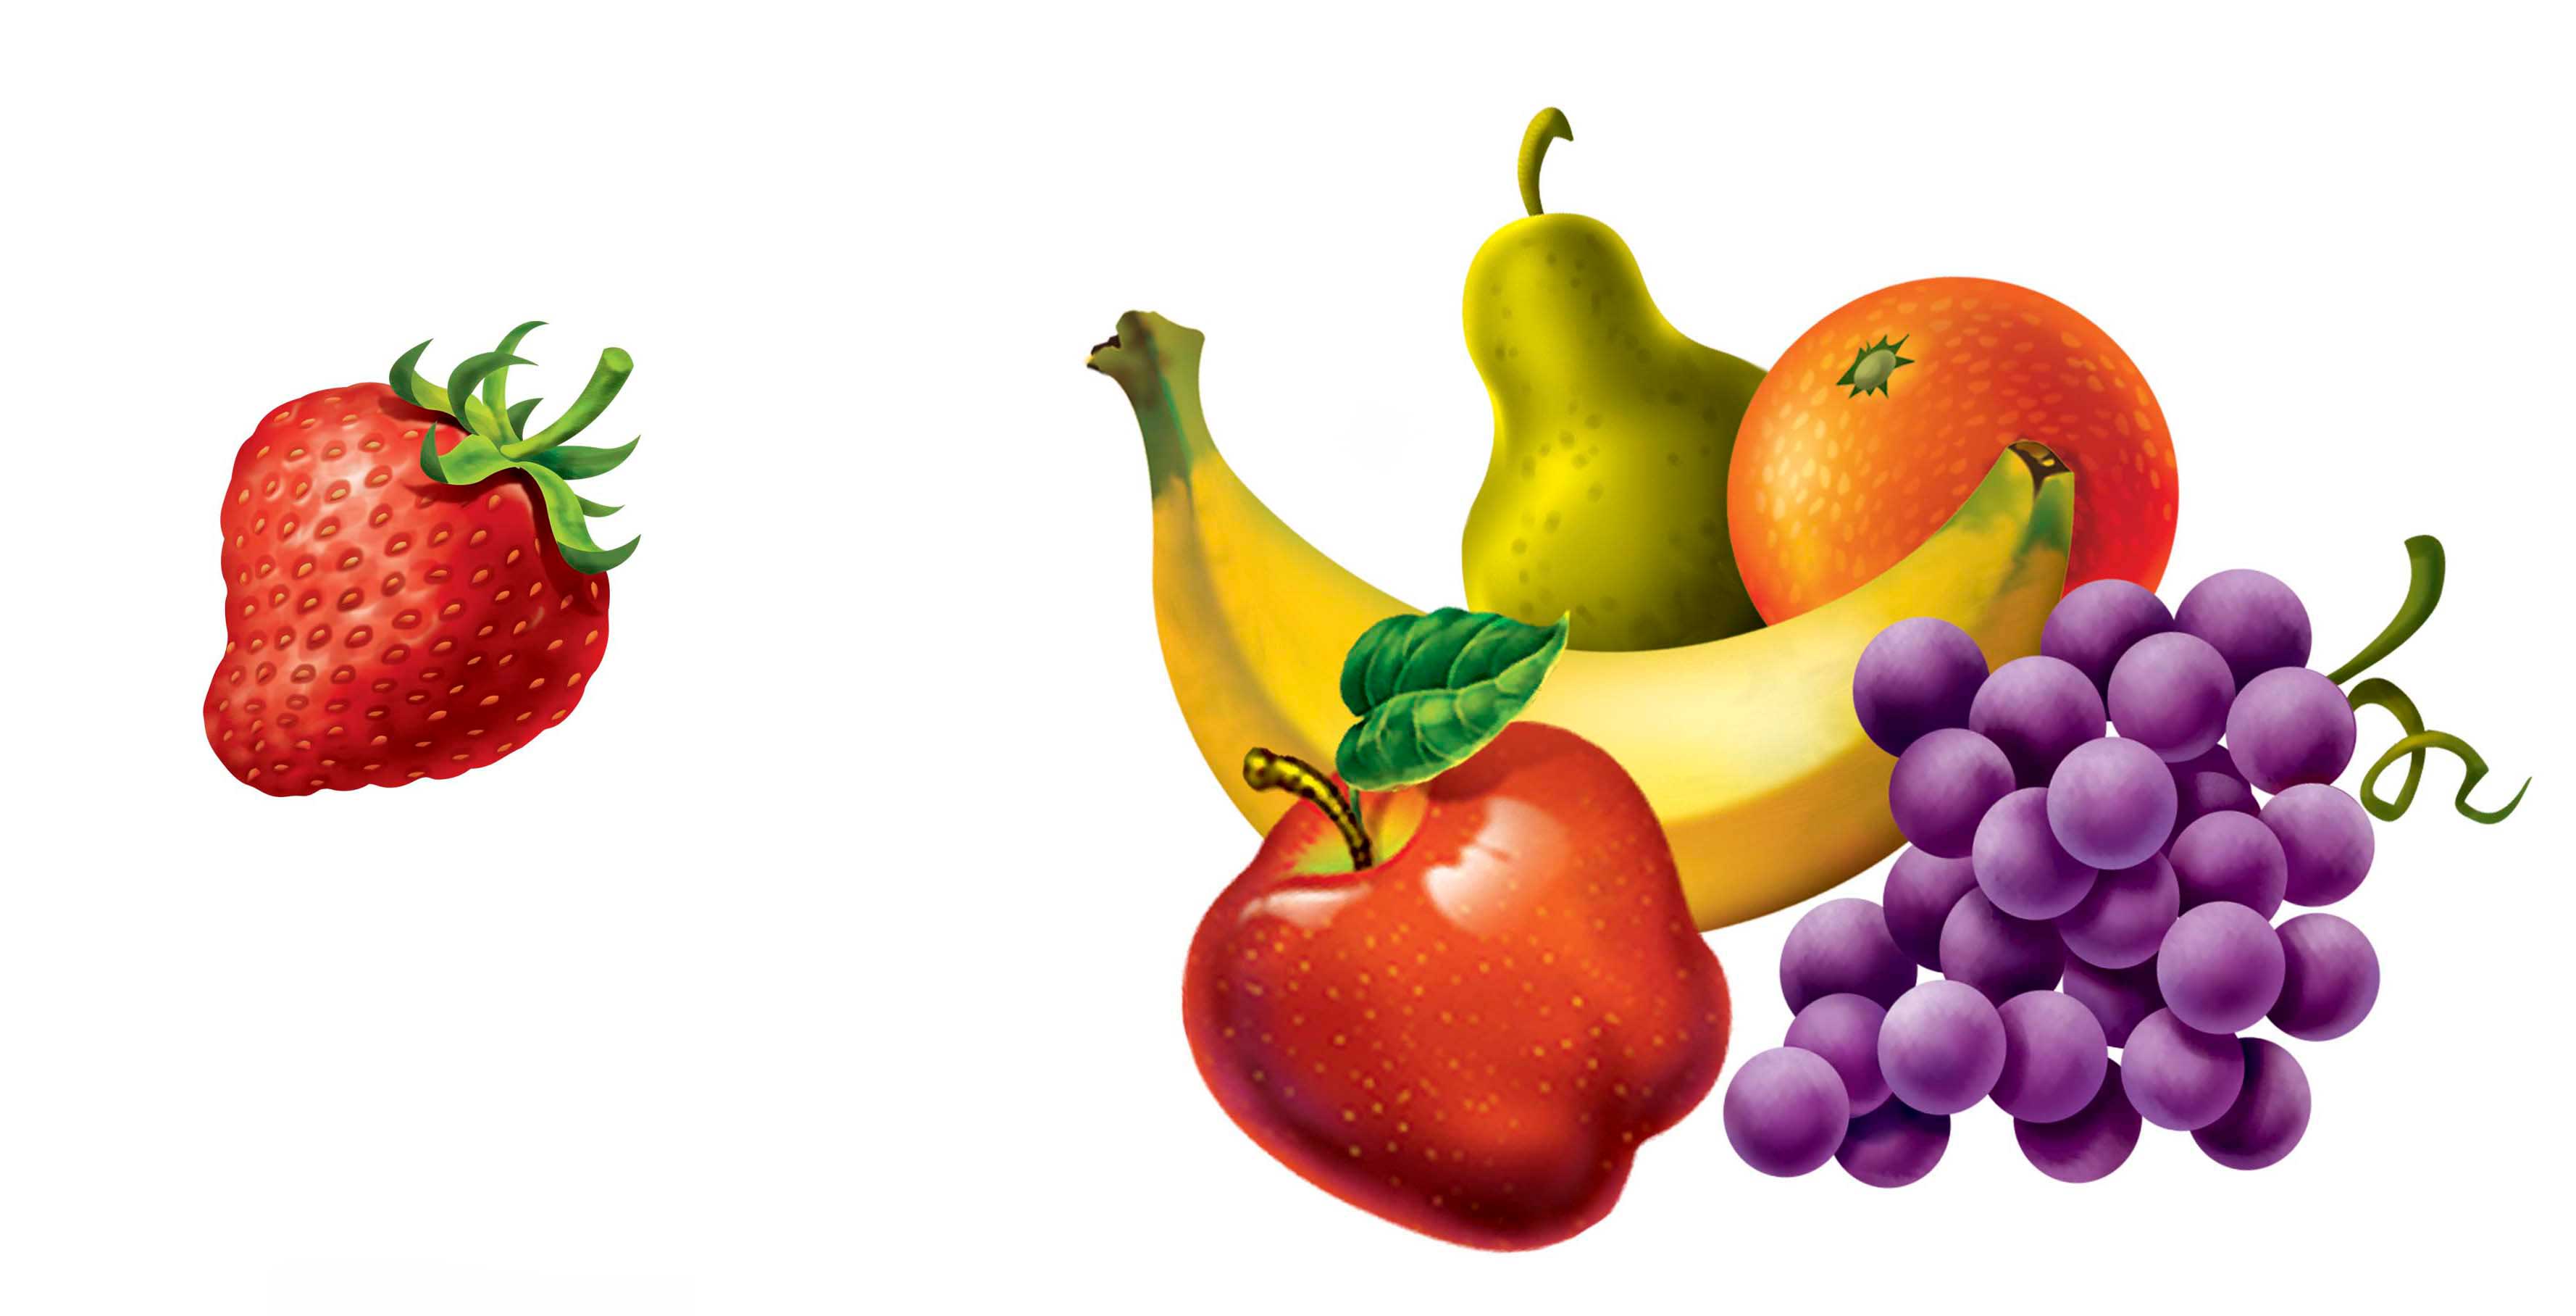 Grape pear. Яблоки бананы виноград. Яблоко груша банан. Яблоки груши виноград. Фрукты картинки для детей.